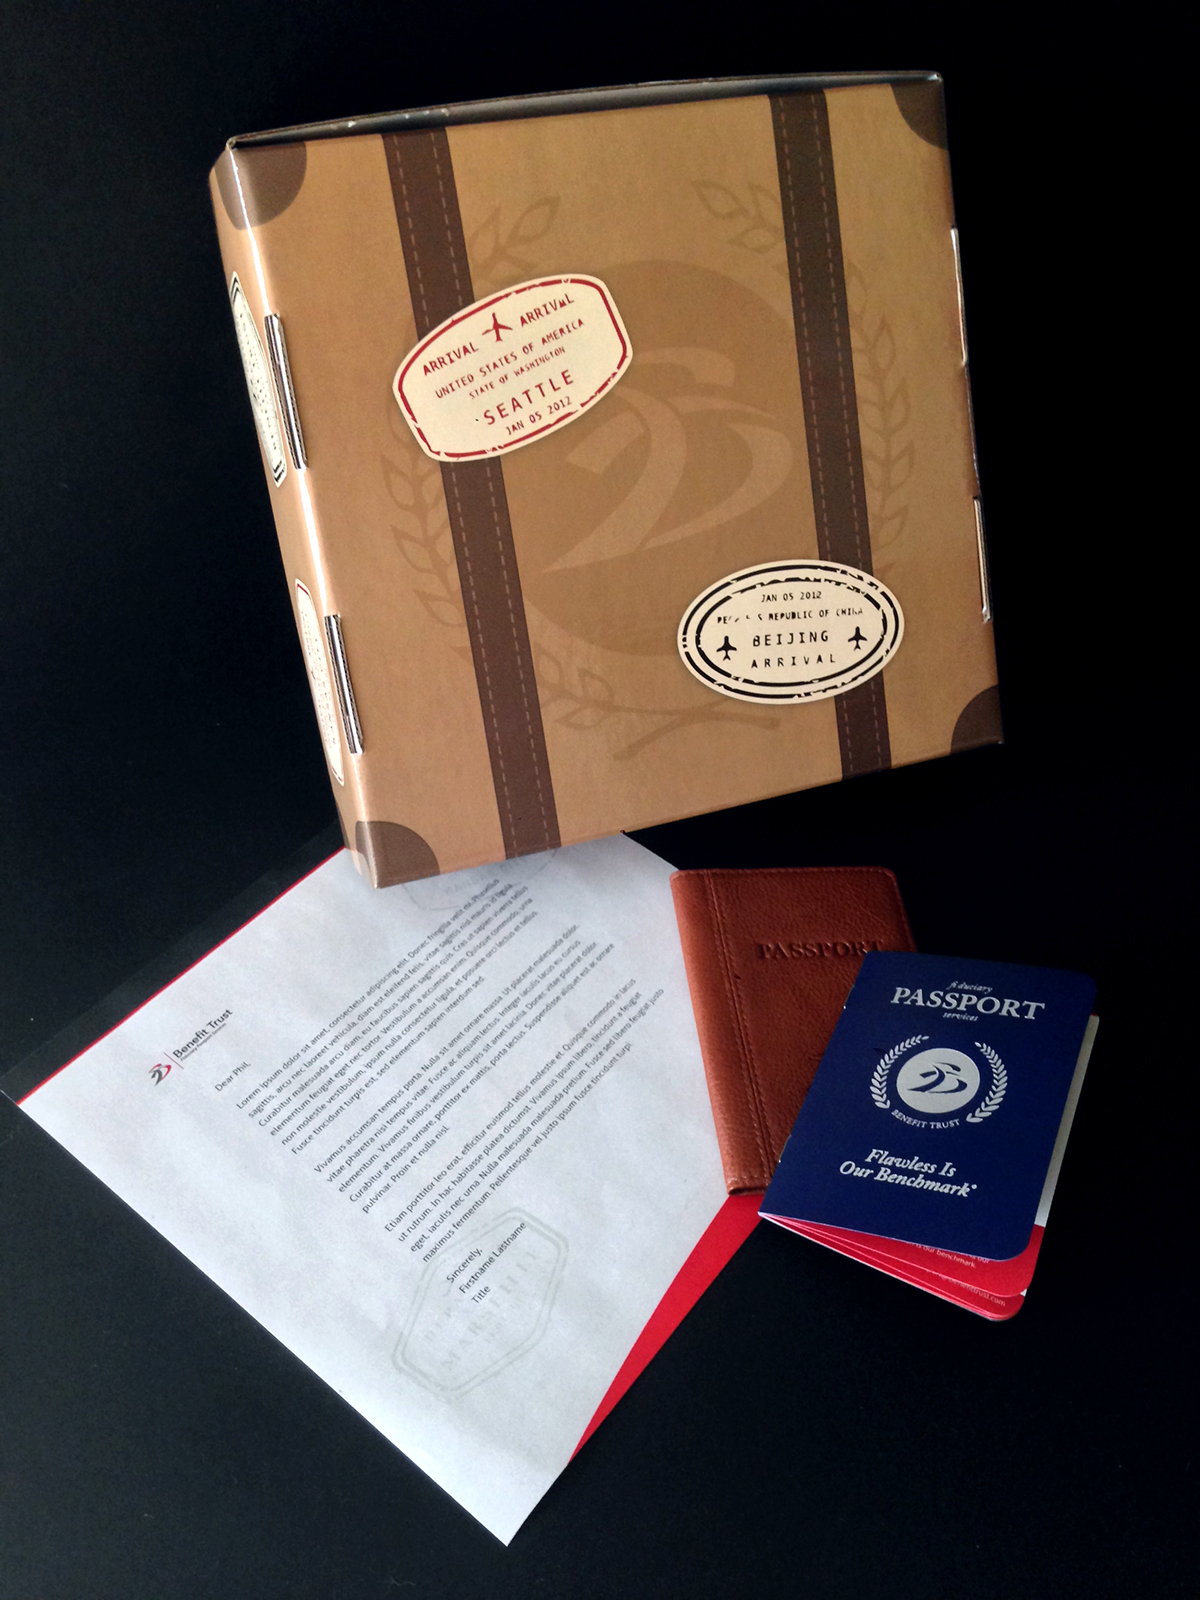 BenefitTrust Leads Campaign mailer Reactor Design Studio Passport suitcase Travel